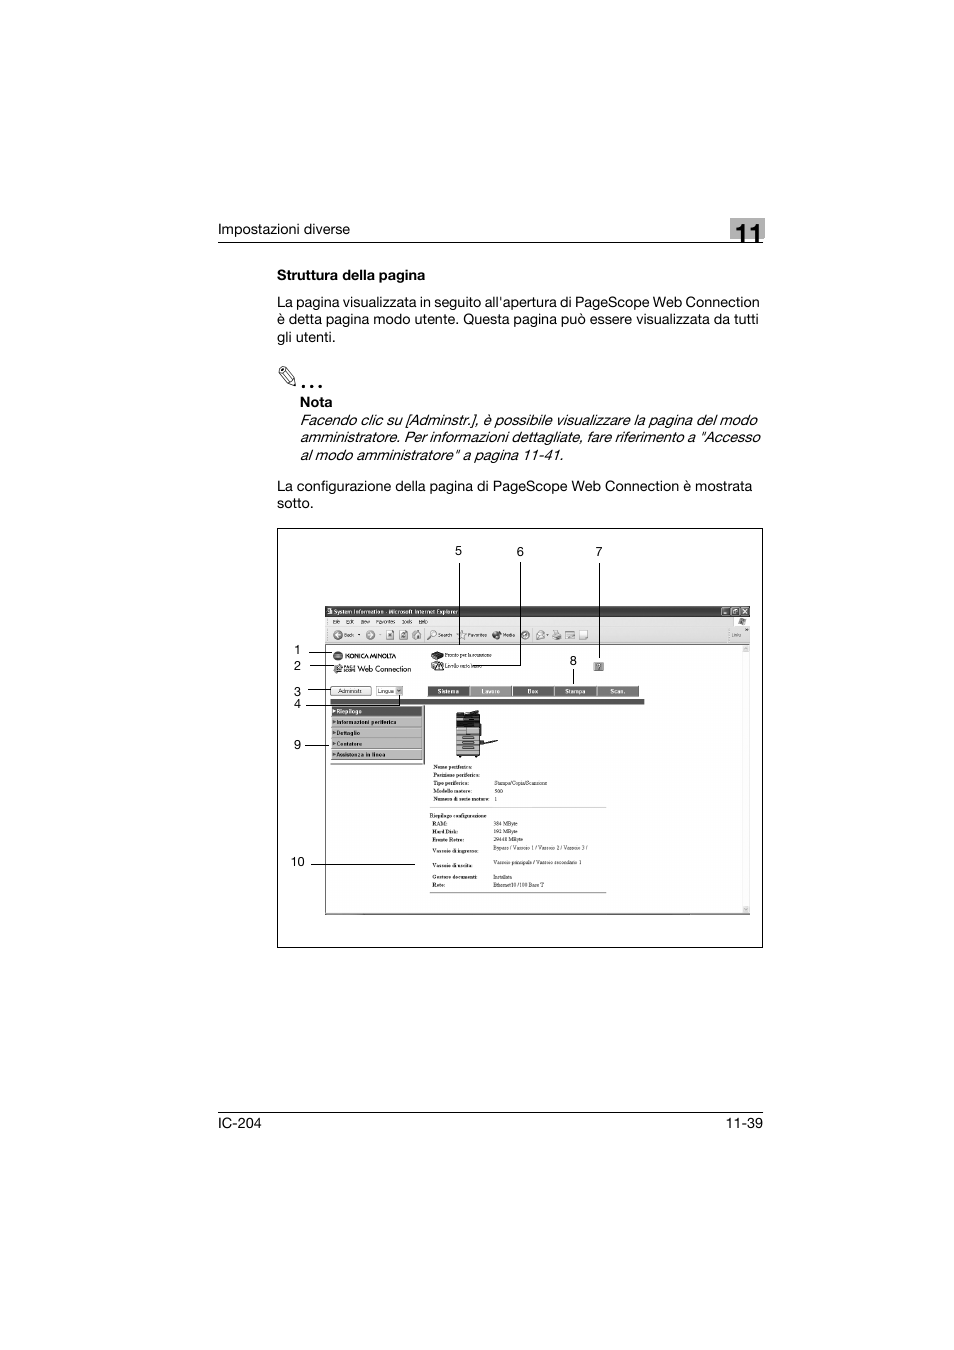 Konica Minolta IC-204 Manuale d'uso | Pagina 355 / 430